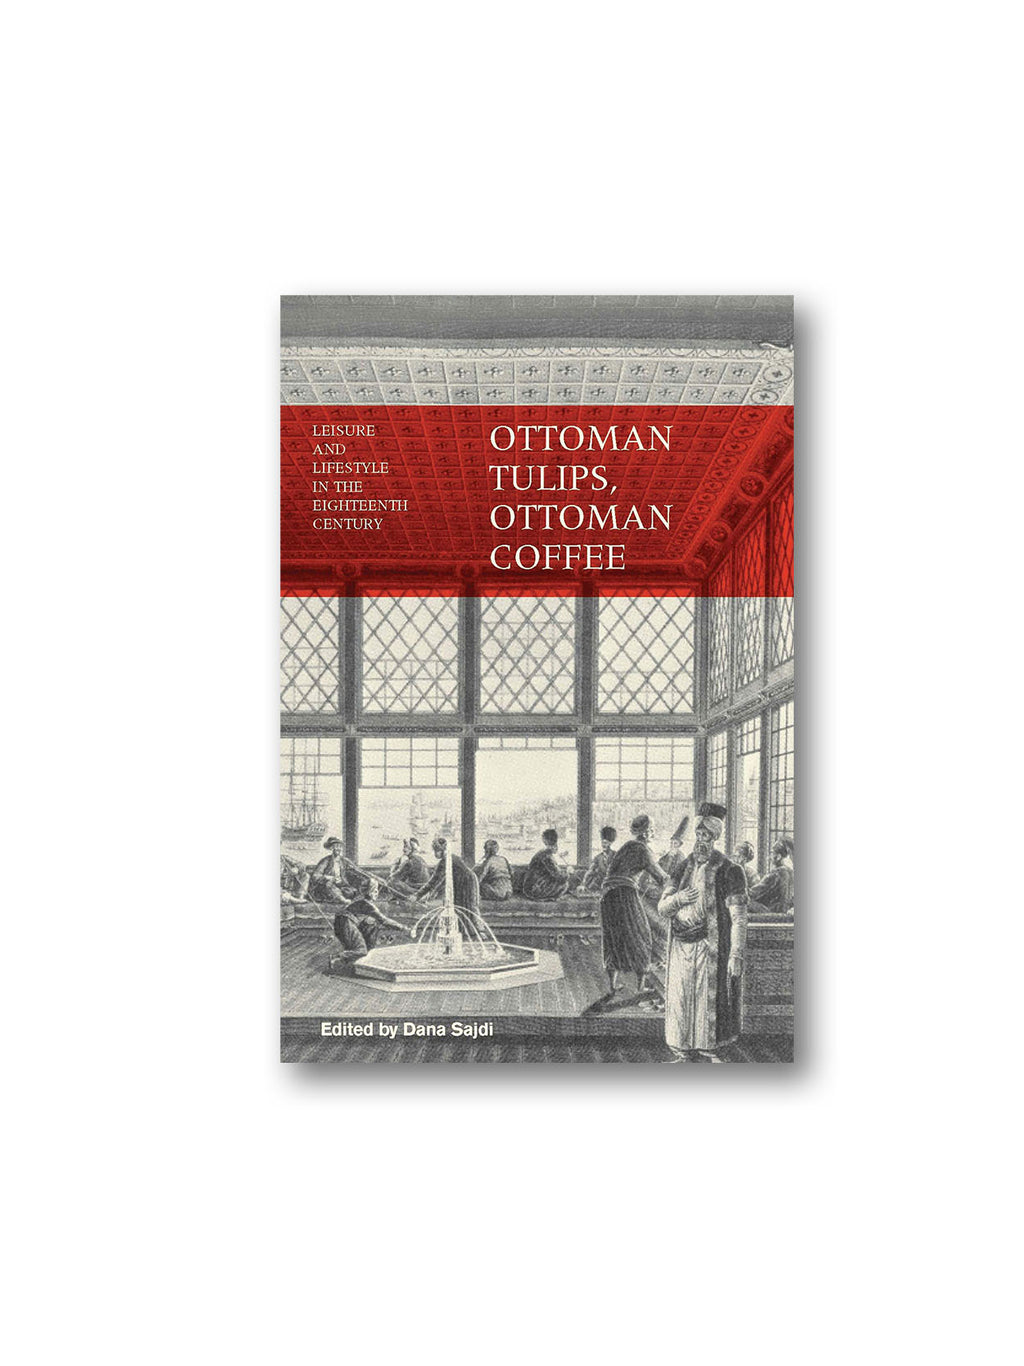 Ottoman Tulips, Ottoman Coffee : Leisure and Lifestyle in the Eighteenth Century